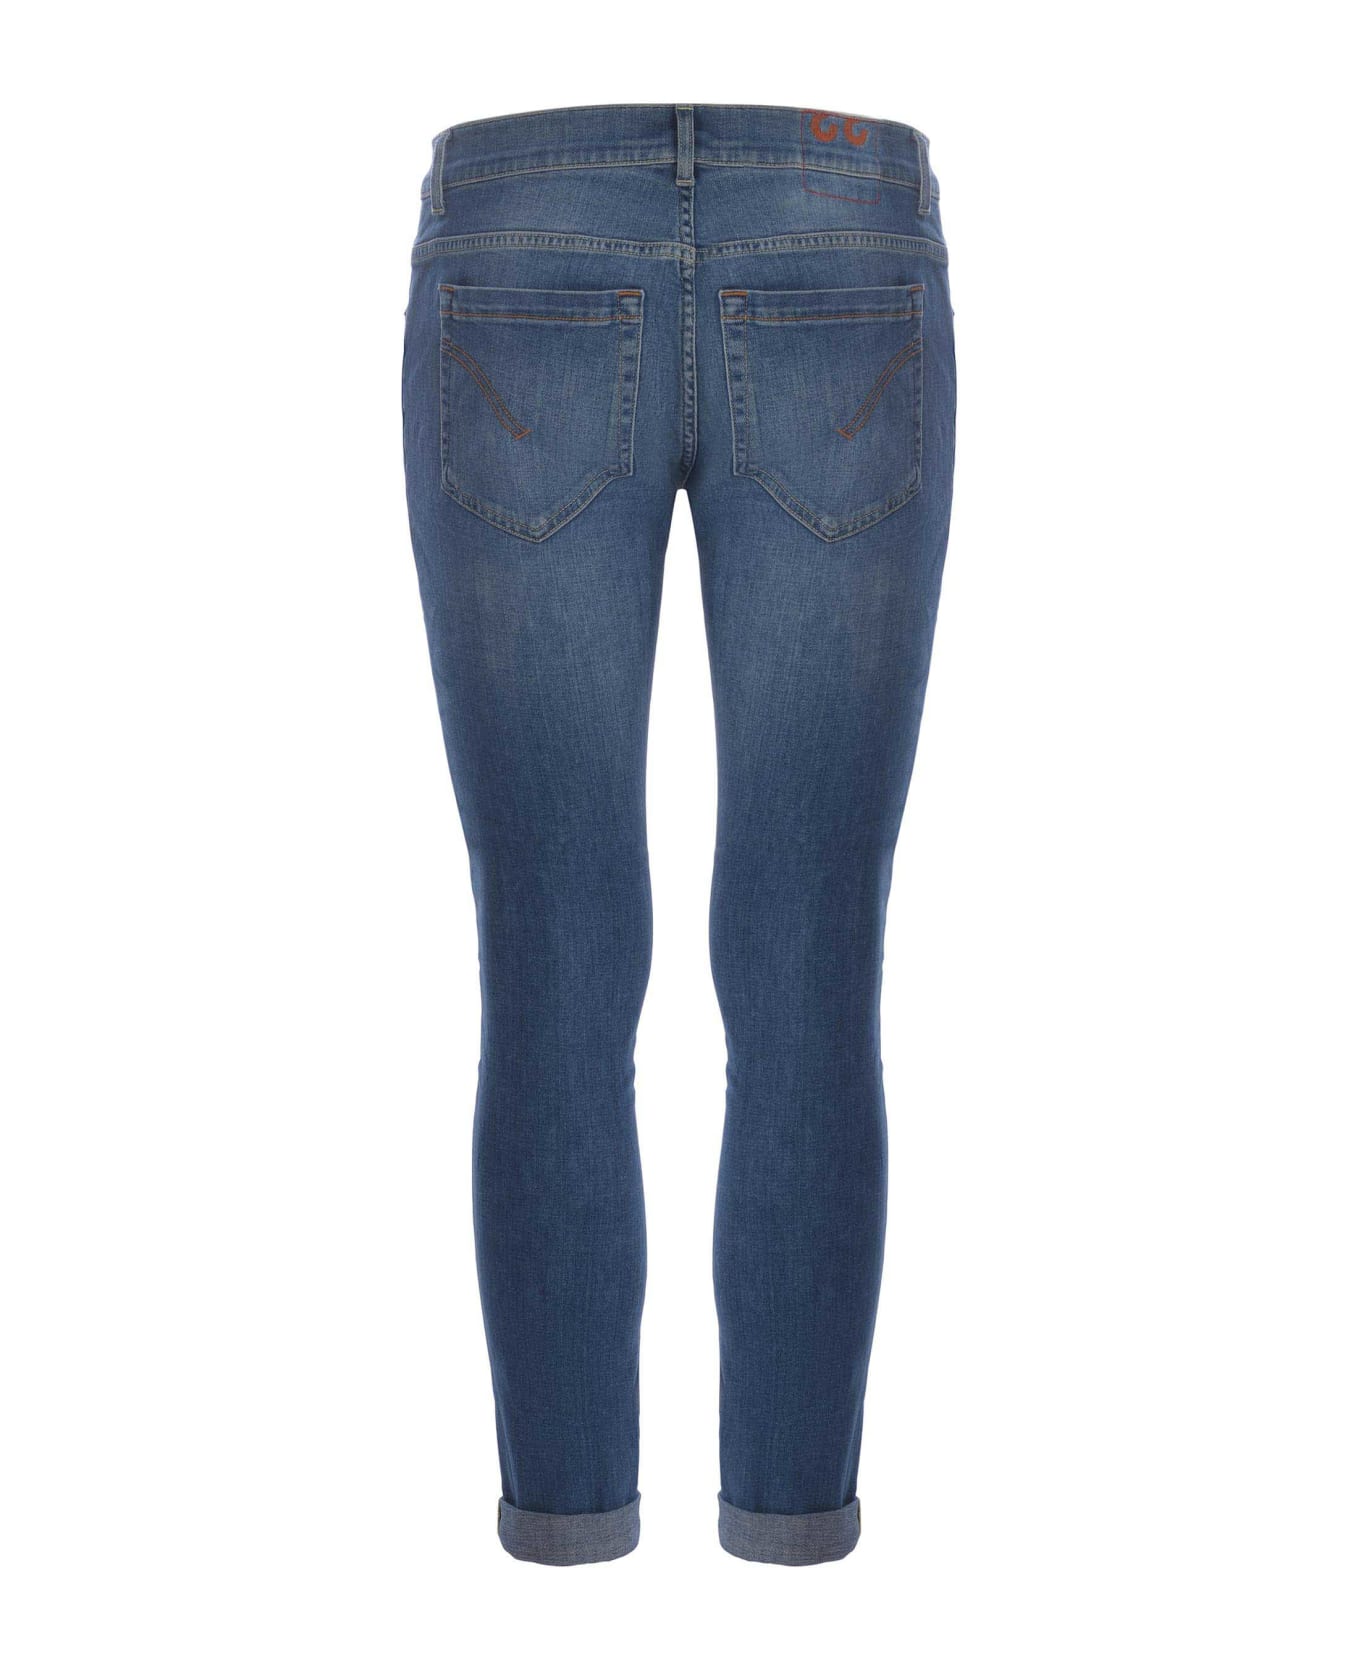 Dondup Jeans Dondup "george" Made Of Stretch Denim - Denim azzurro デニム